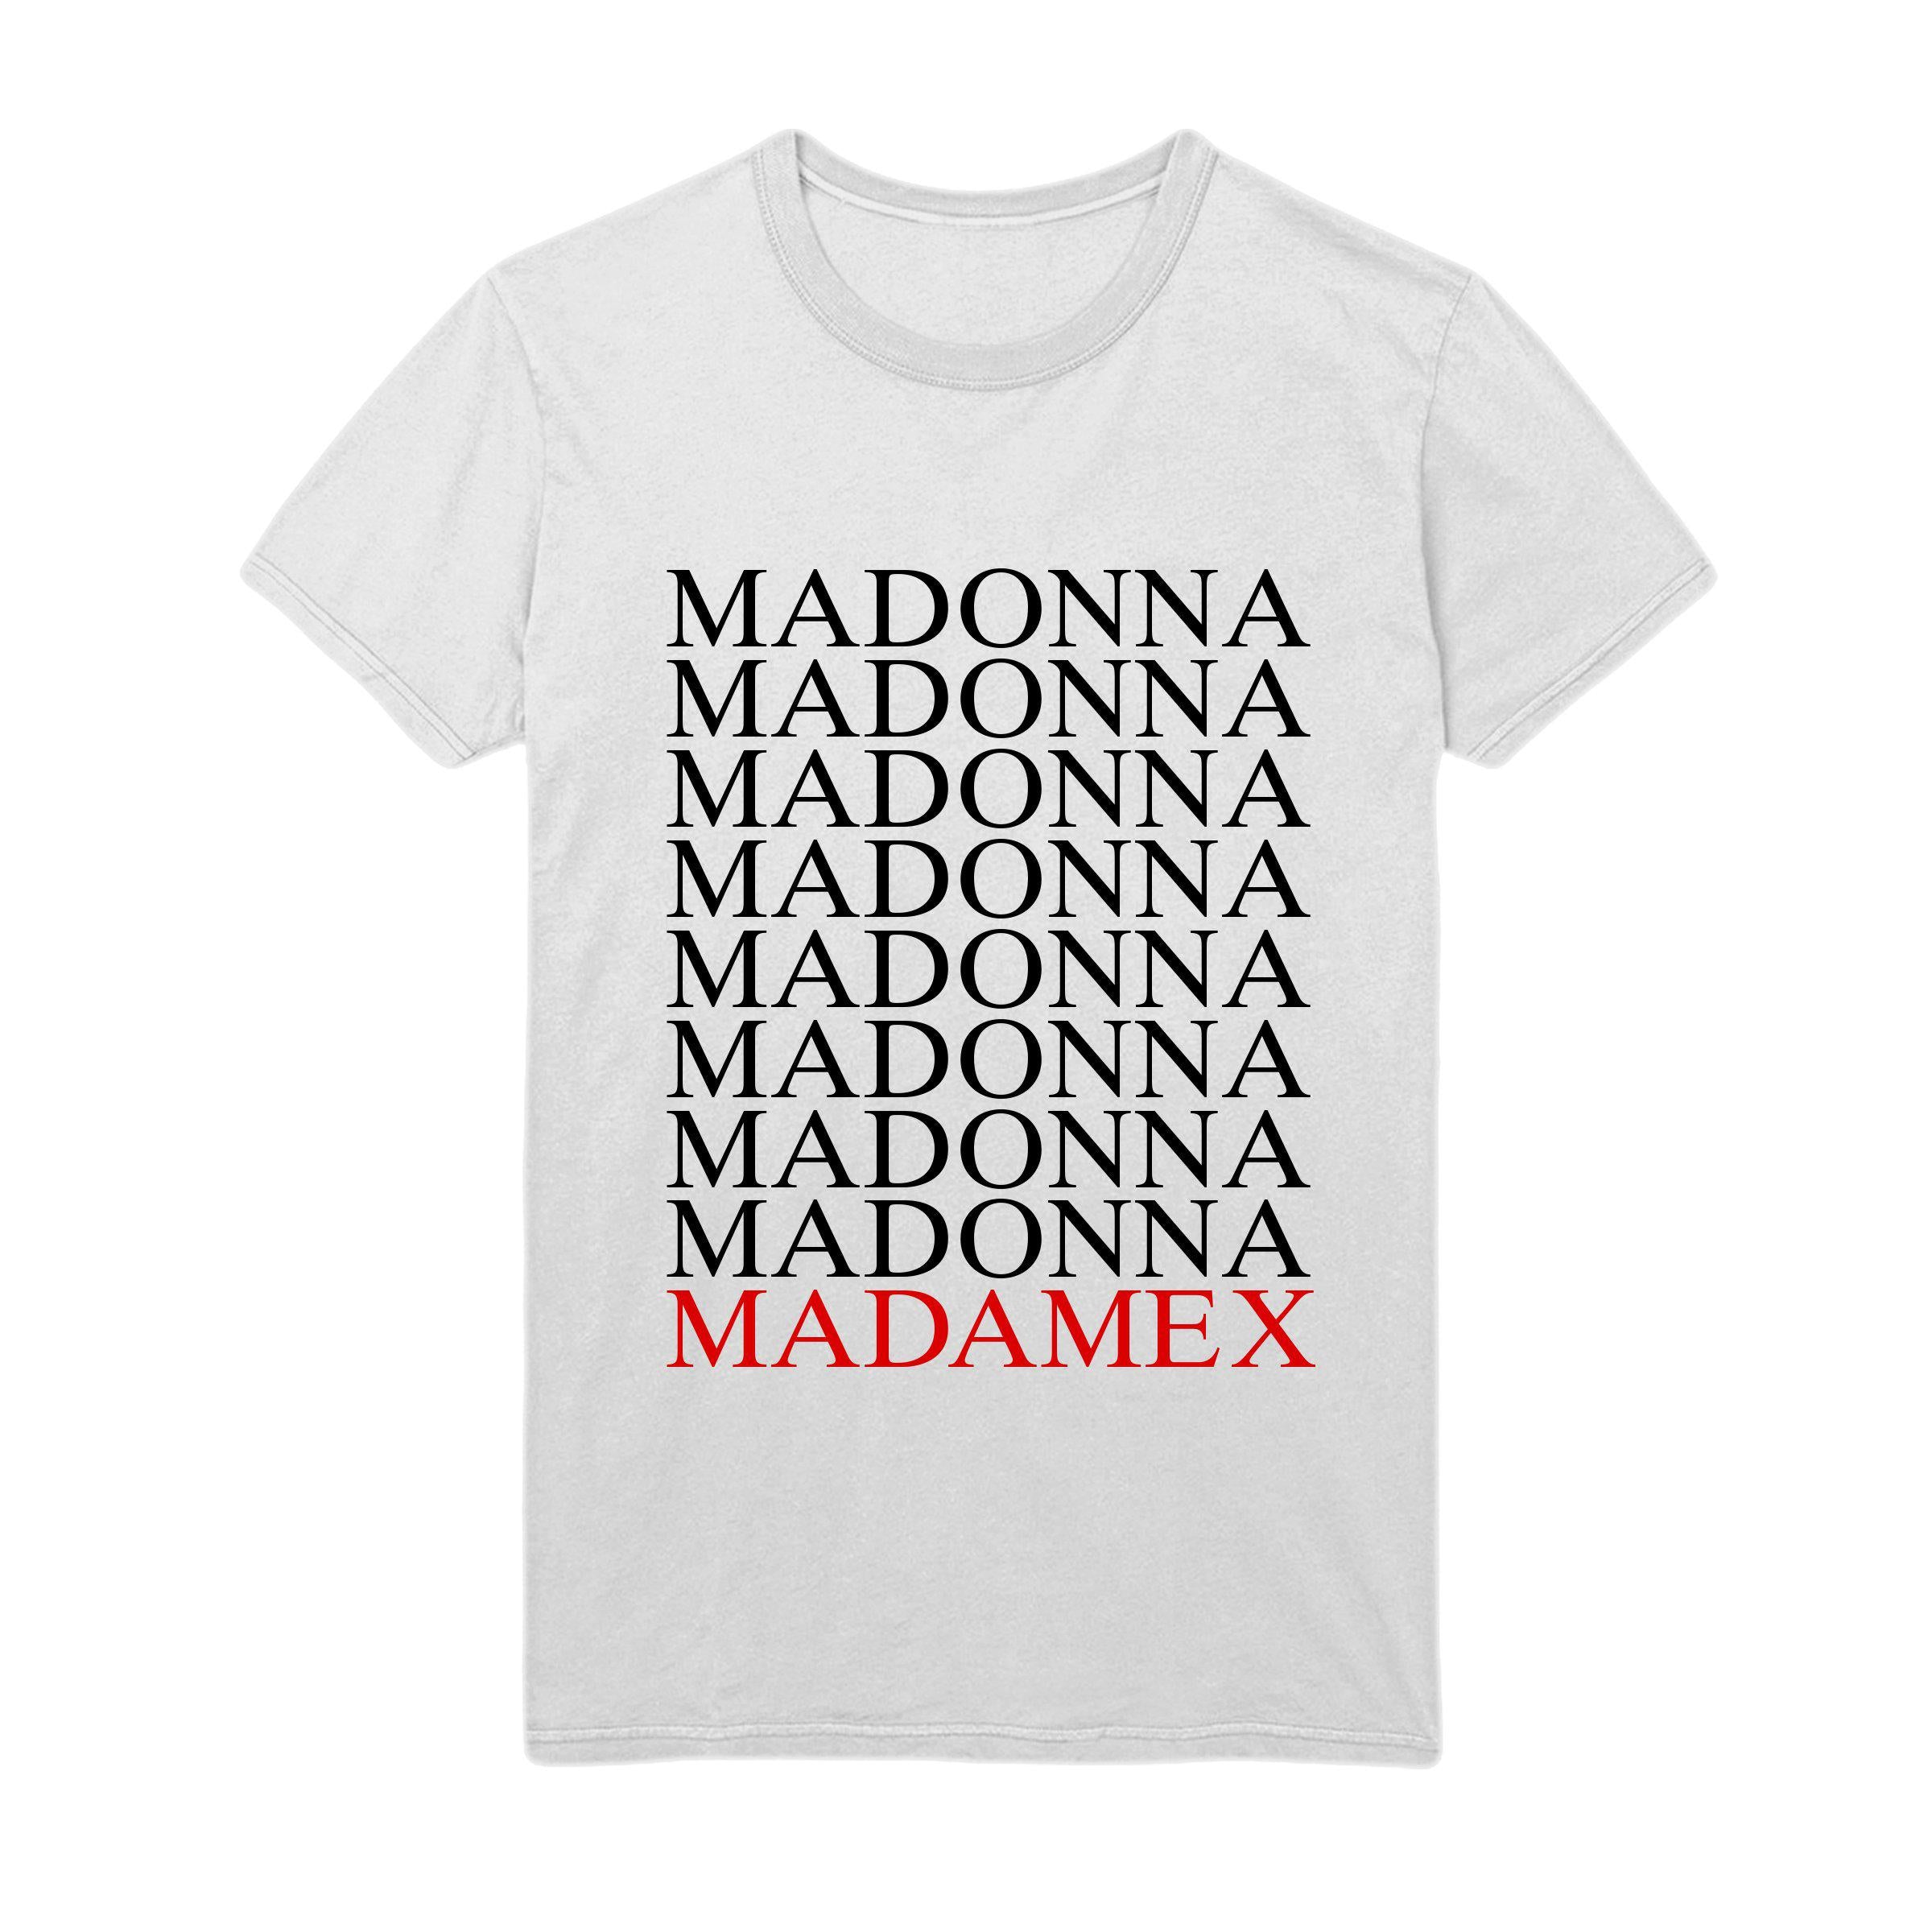 Madonna Madame X logo tee - white-Madonna